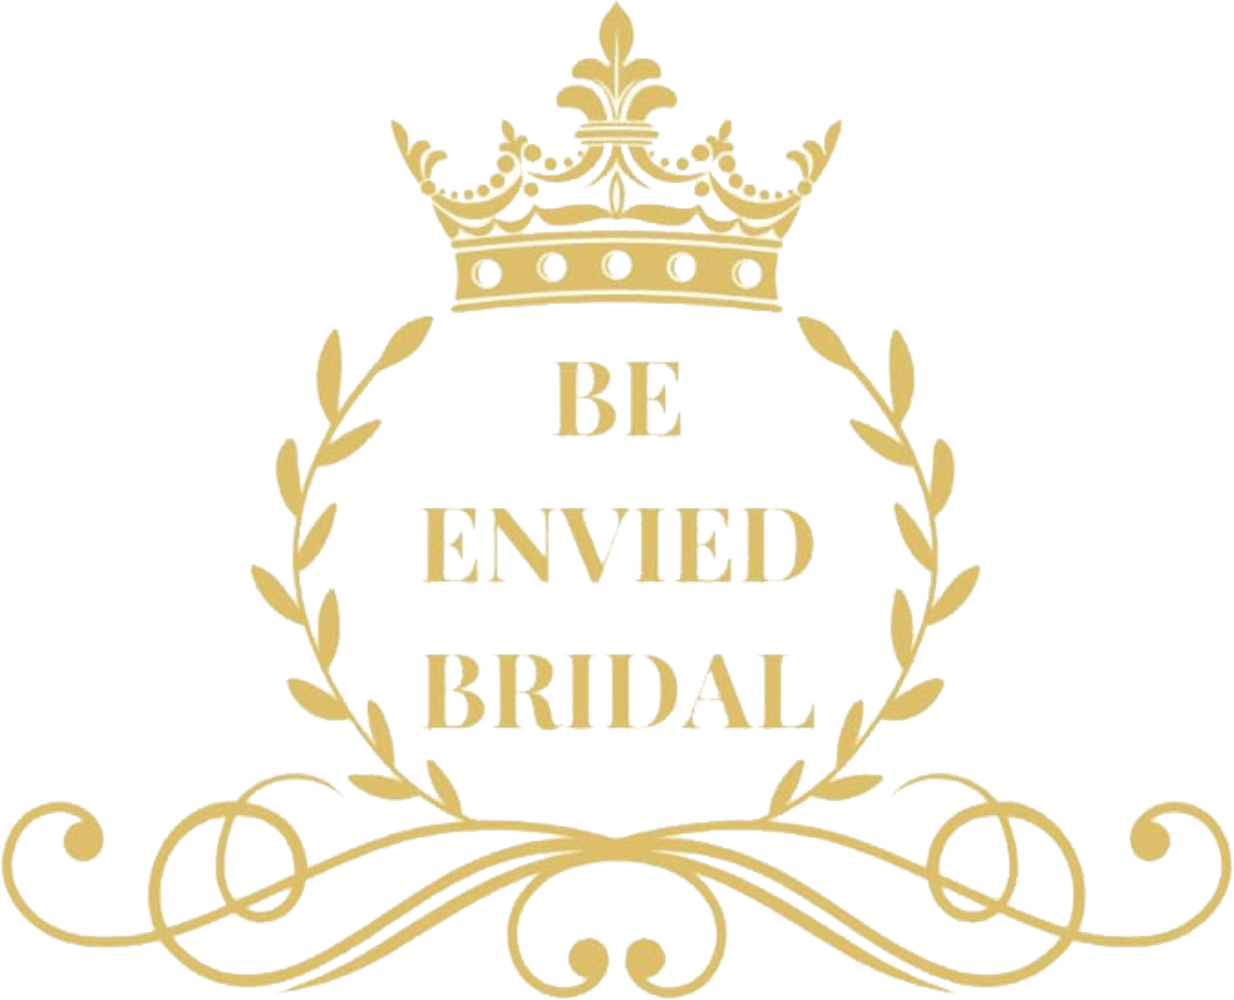 Be Envied Bridal